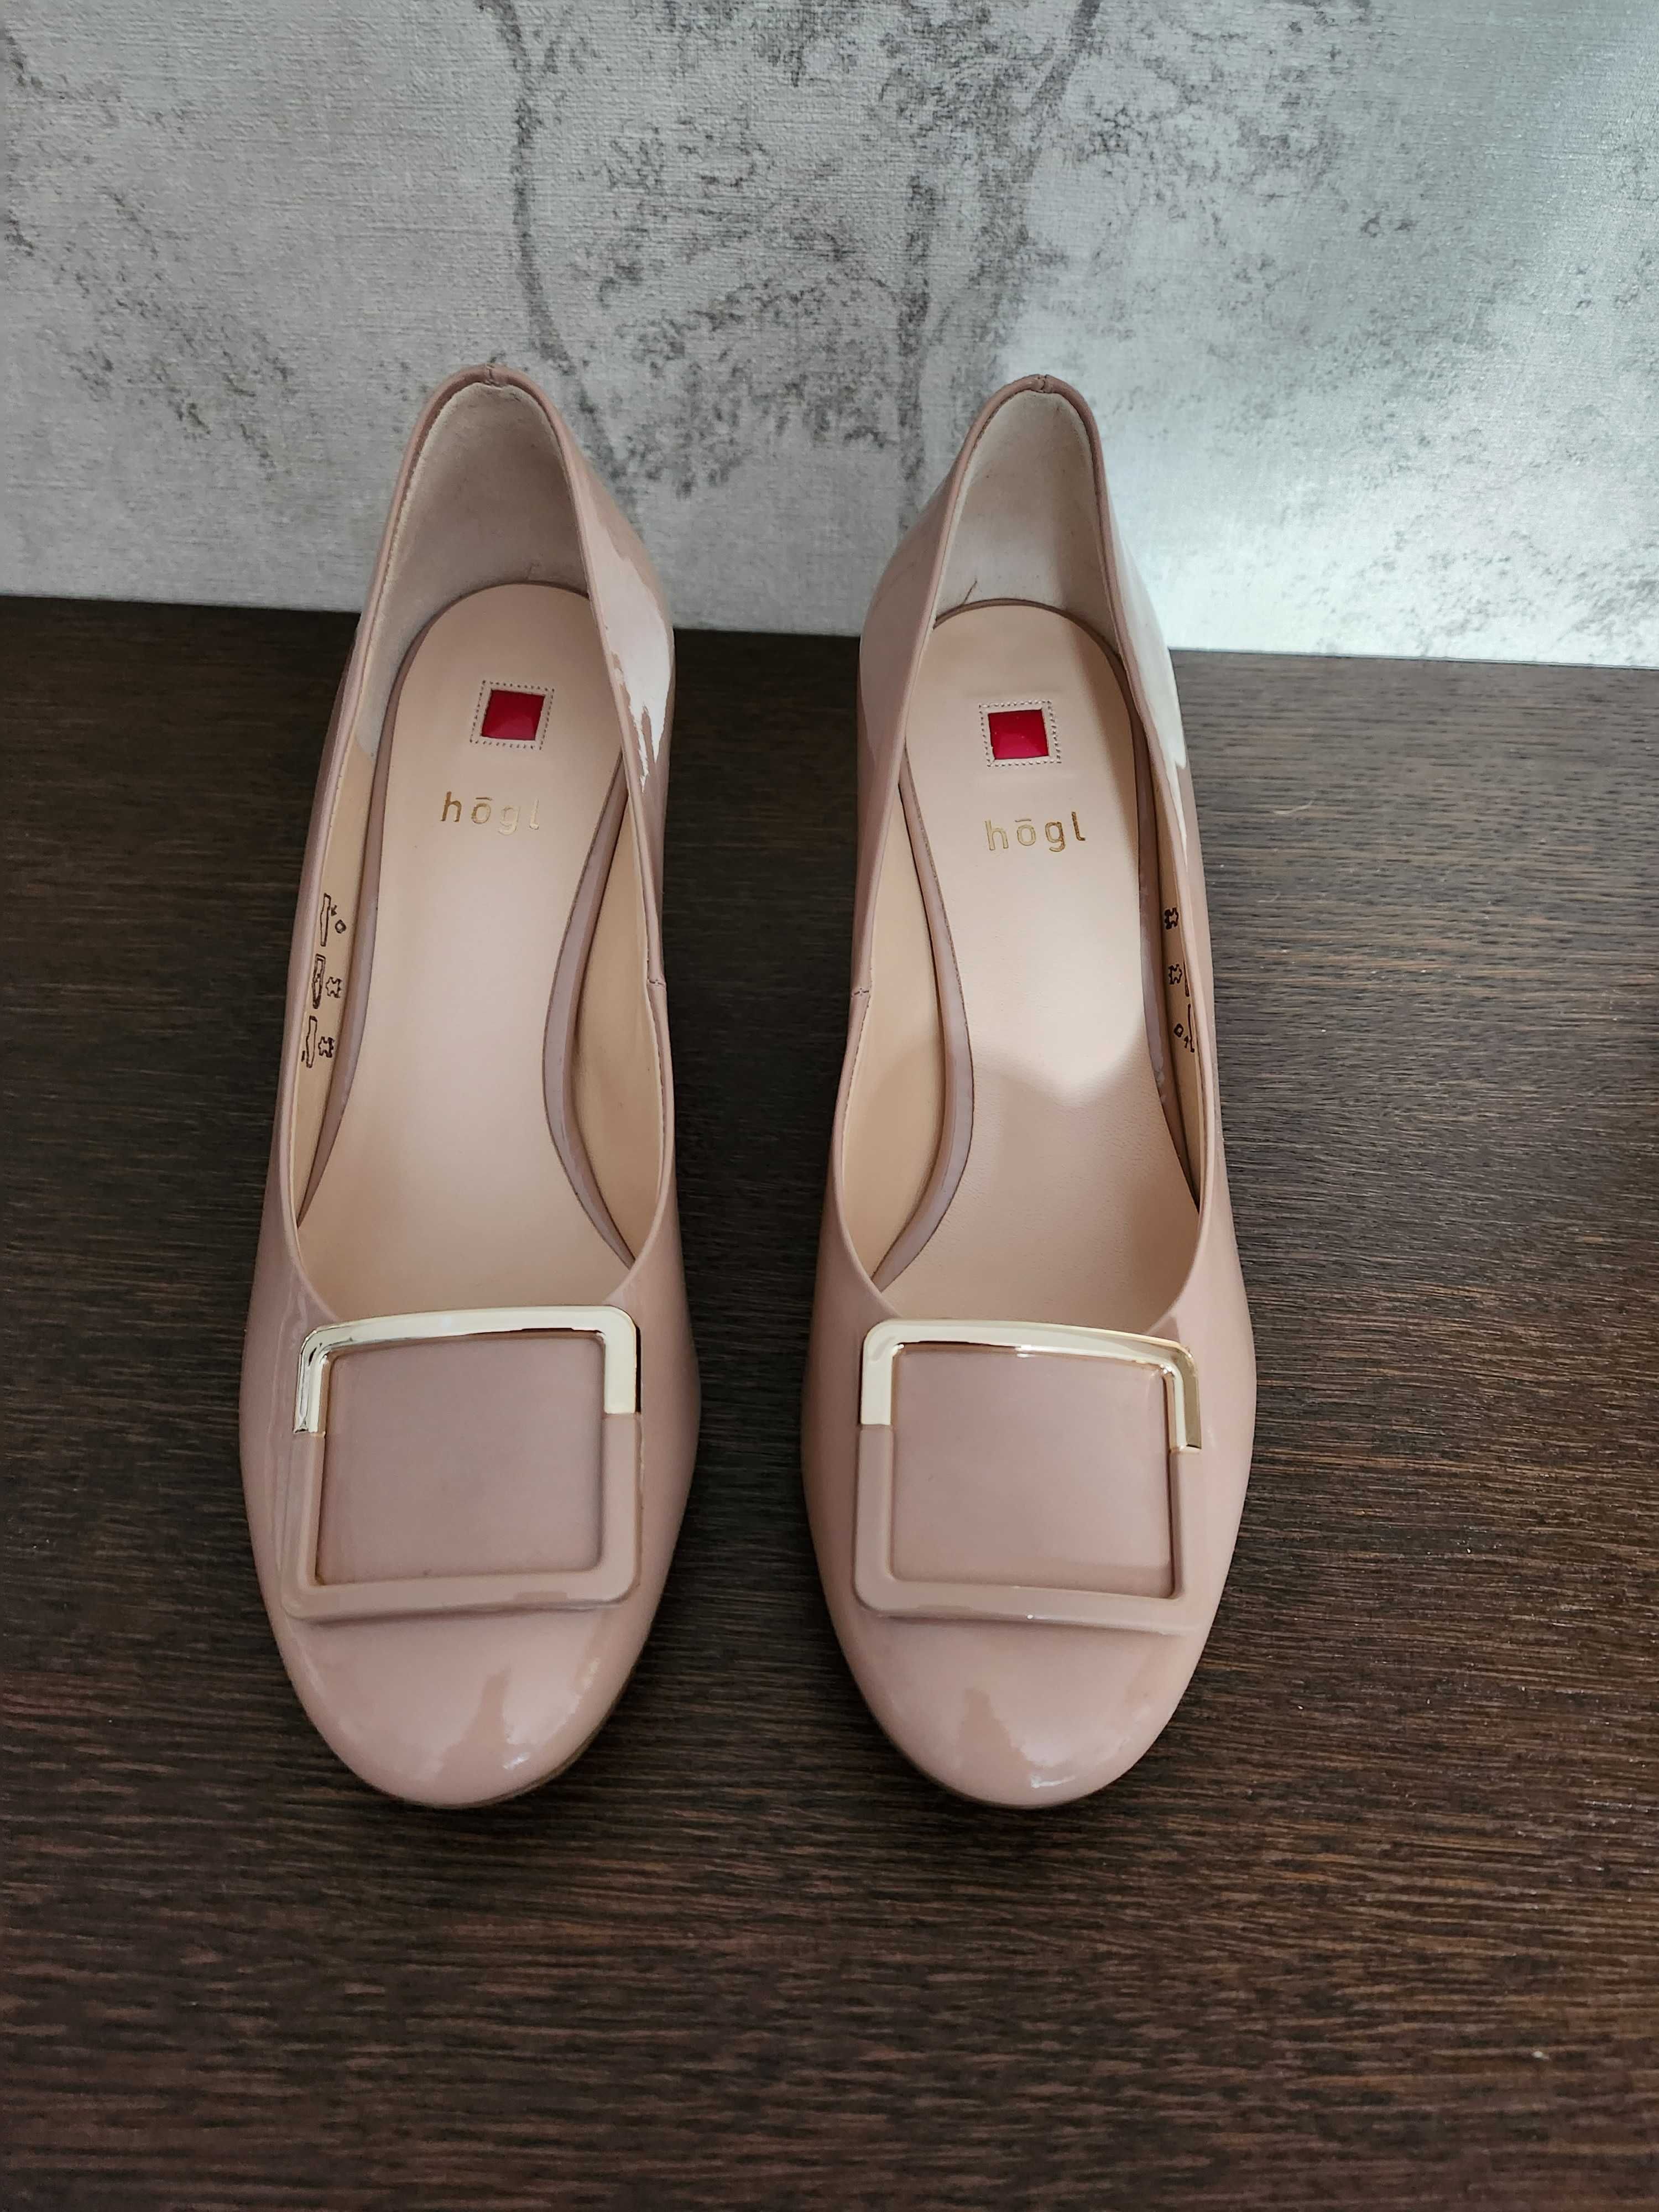 Чисто нови елегантни обувки на австрийската марка Hogl